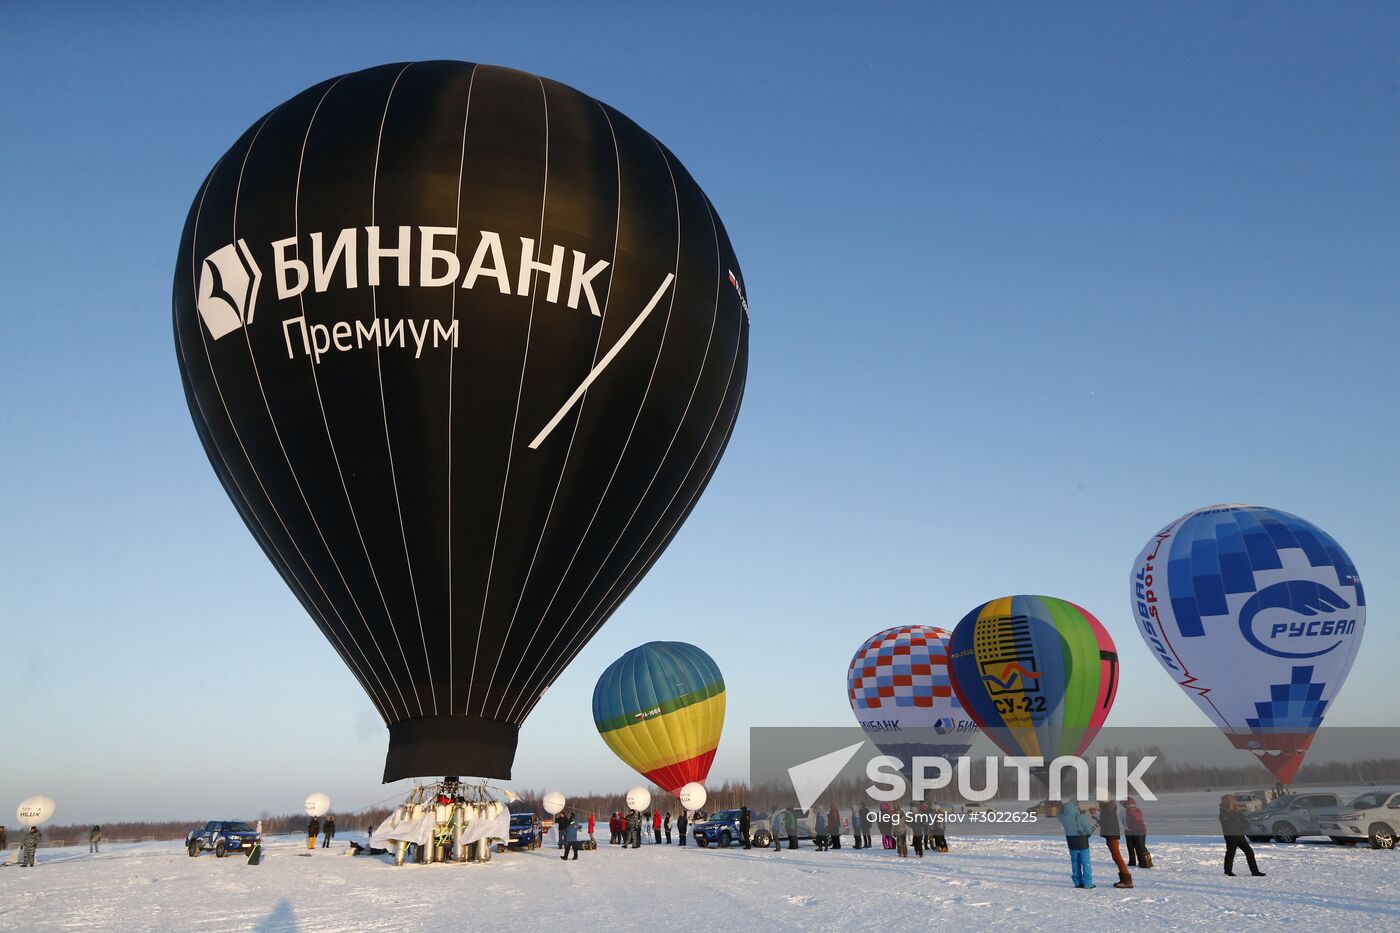 Fyodor Konyukhov and Ivan Menyailo lift off in a hot-air balloon